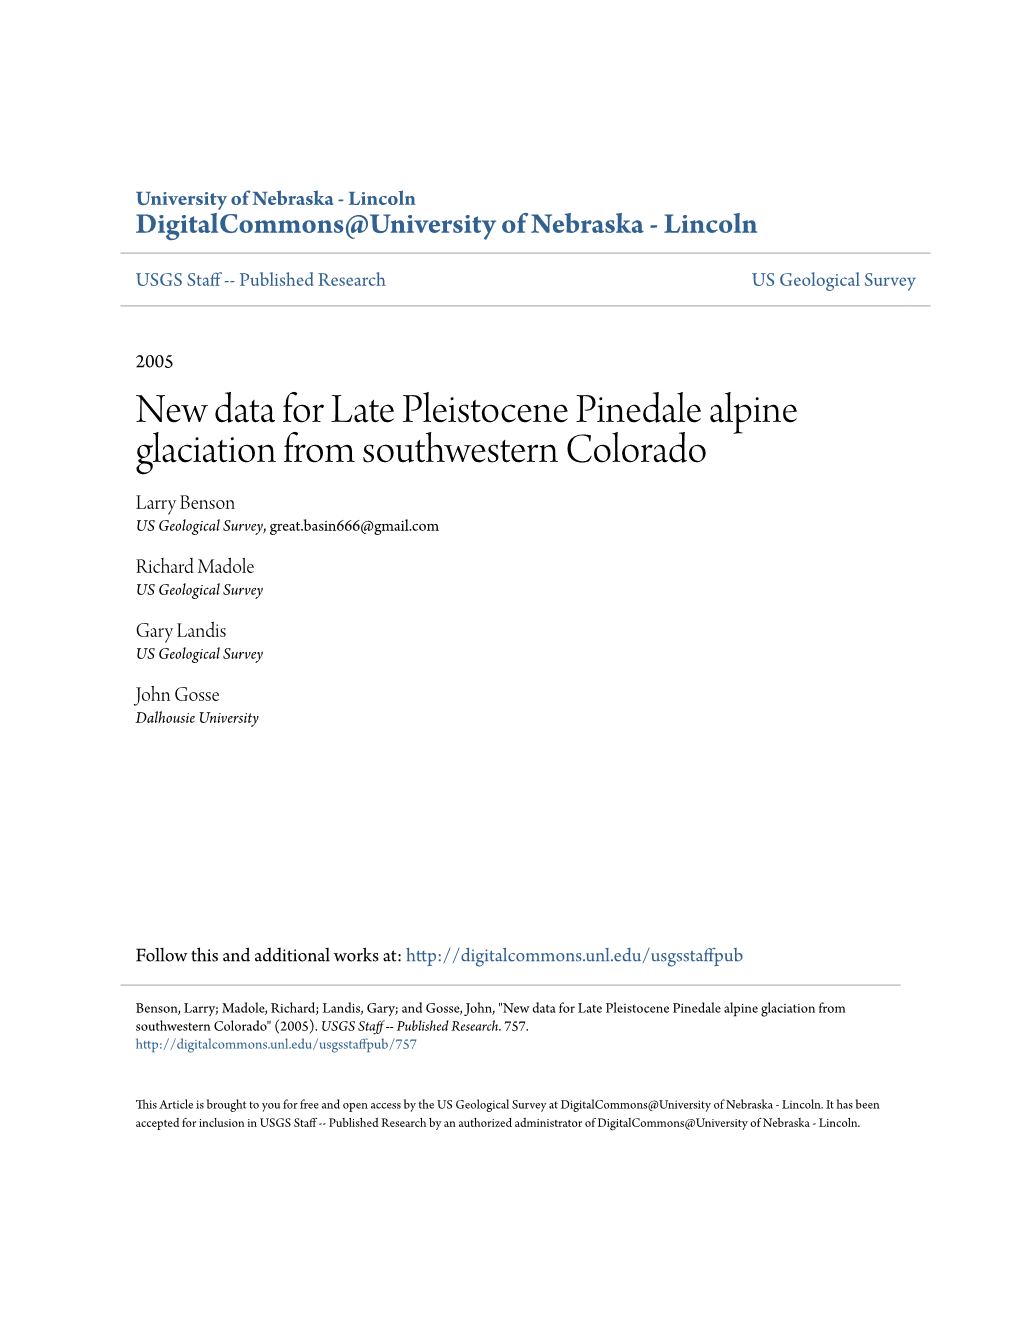 New Data for Late Pleistocene Pinedale Alpine Glaciation from Southwestern Colorado Larry Benson US Geological Survey, Great.Basin666@Gmail.Com